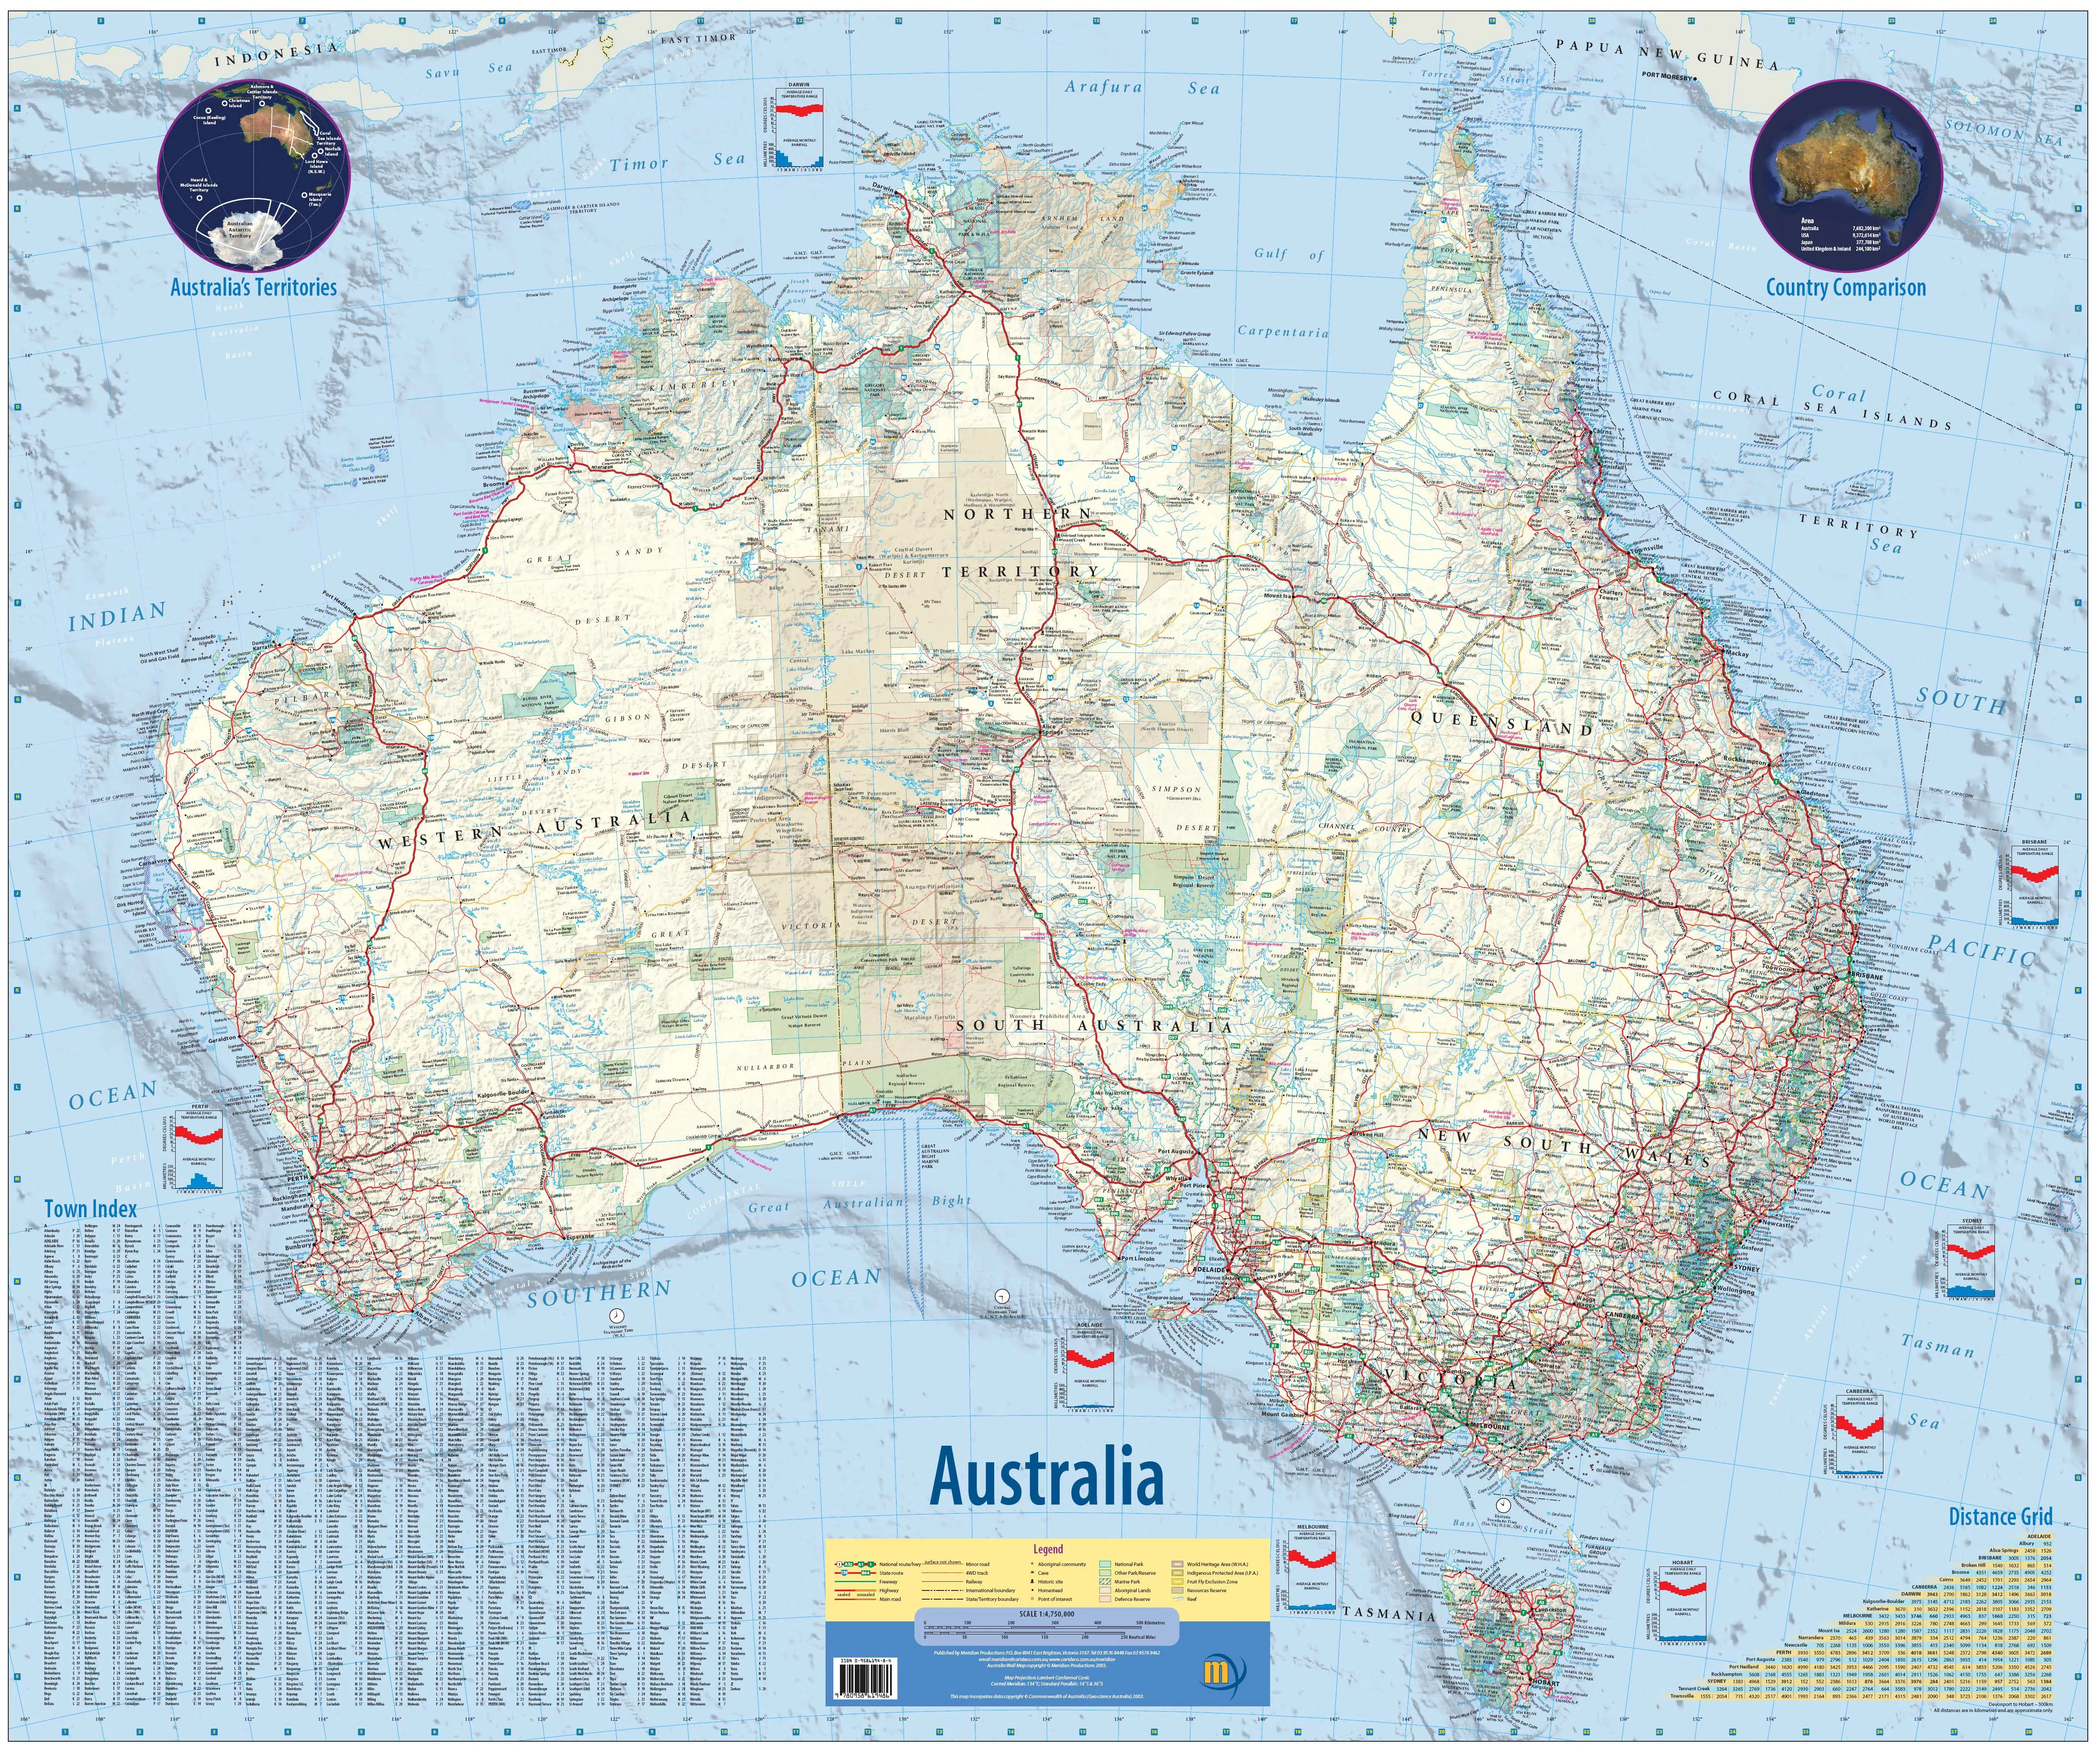 Australia Detailed Map - Mapsof.net